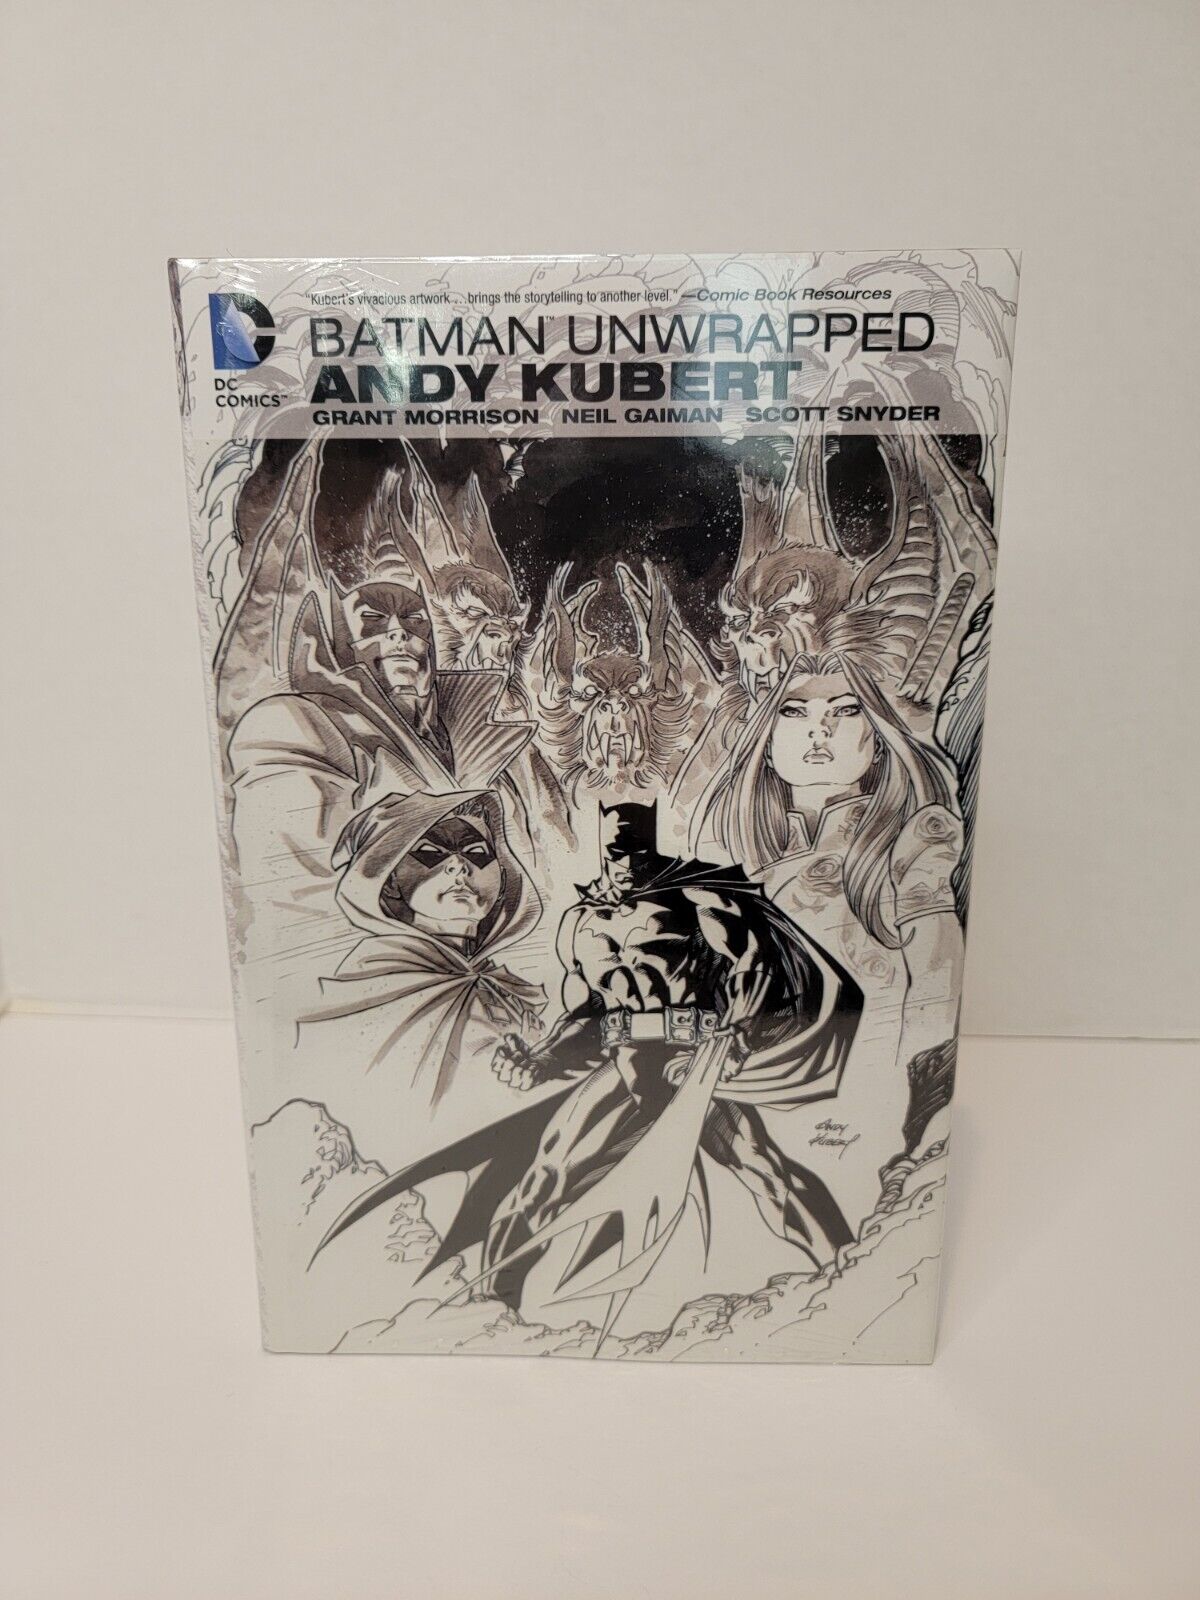 DC Comics Batman Unwrapped Andy Kubert Neil Gaiman Scott Snyder Grant Morrison